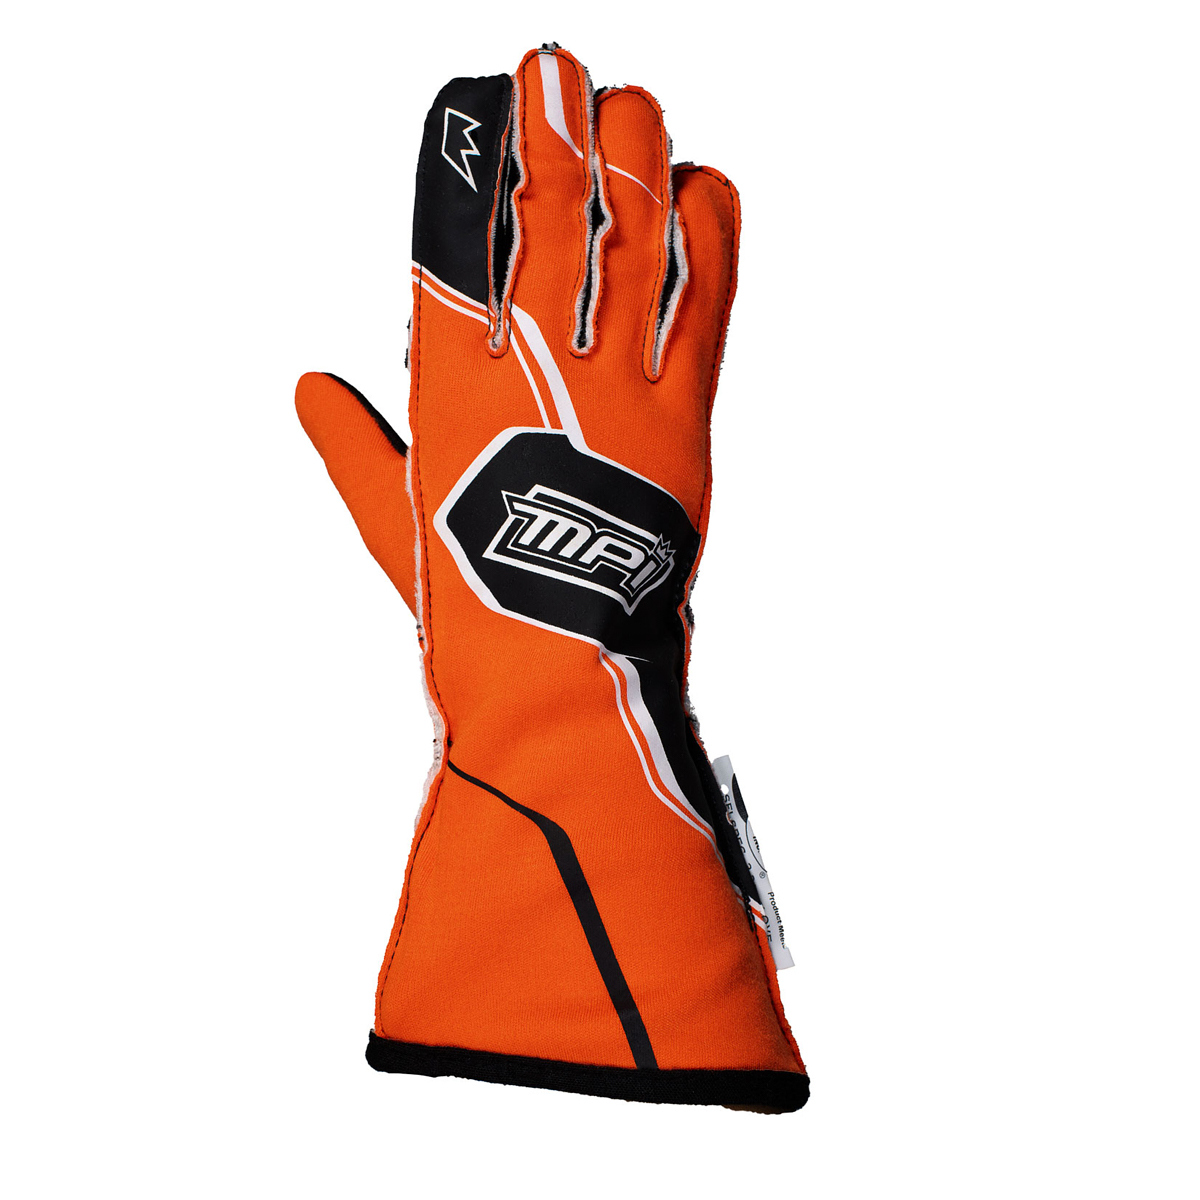 MPI USA MPI-GL-O-XS Driving Gloves, SFI 3.3/5, Double Layer, Nomex, Padded Palm, Orange / Black, X-Small, Pair